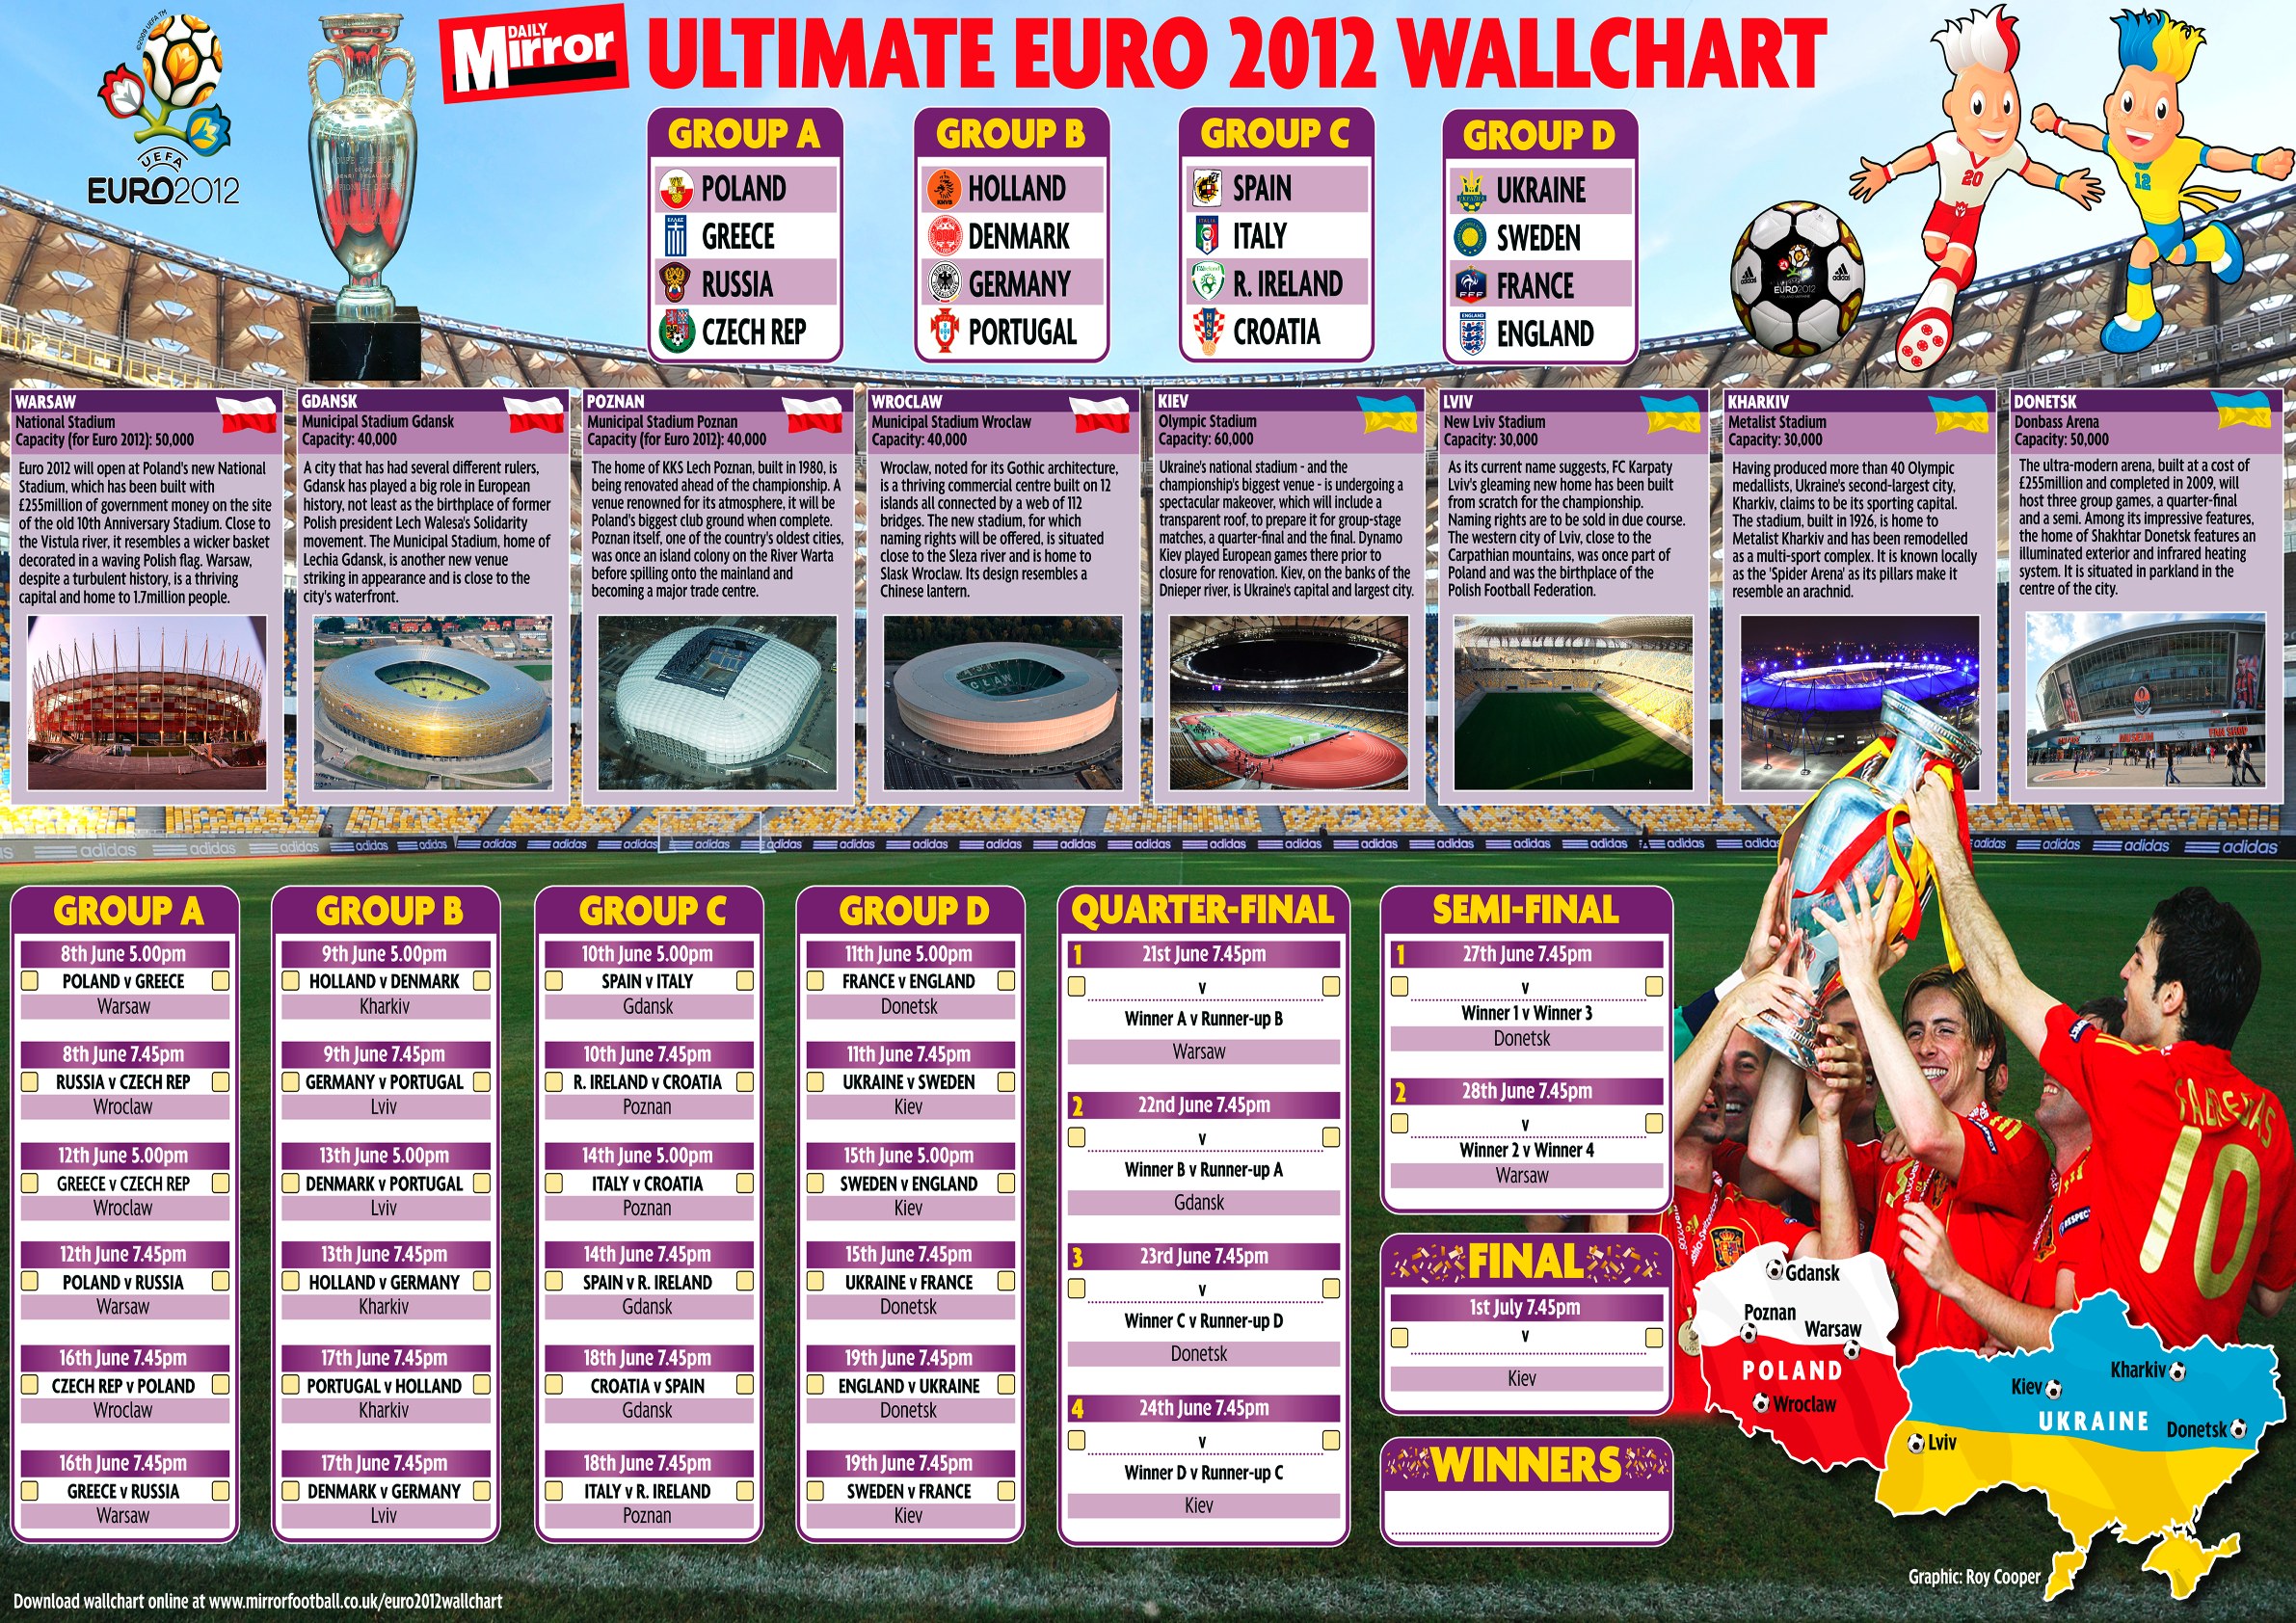 omj_euro2012-wallchart.jpg